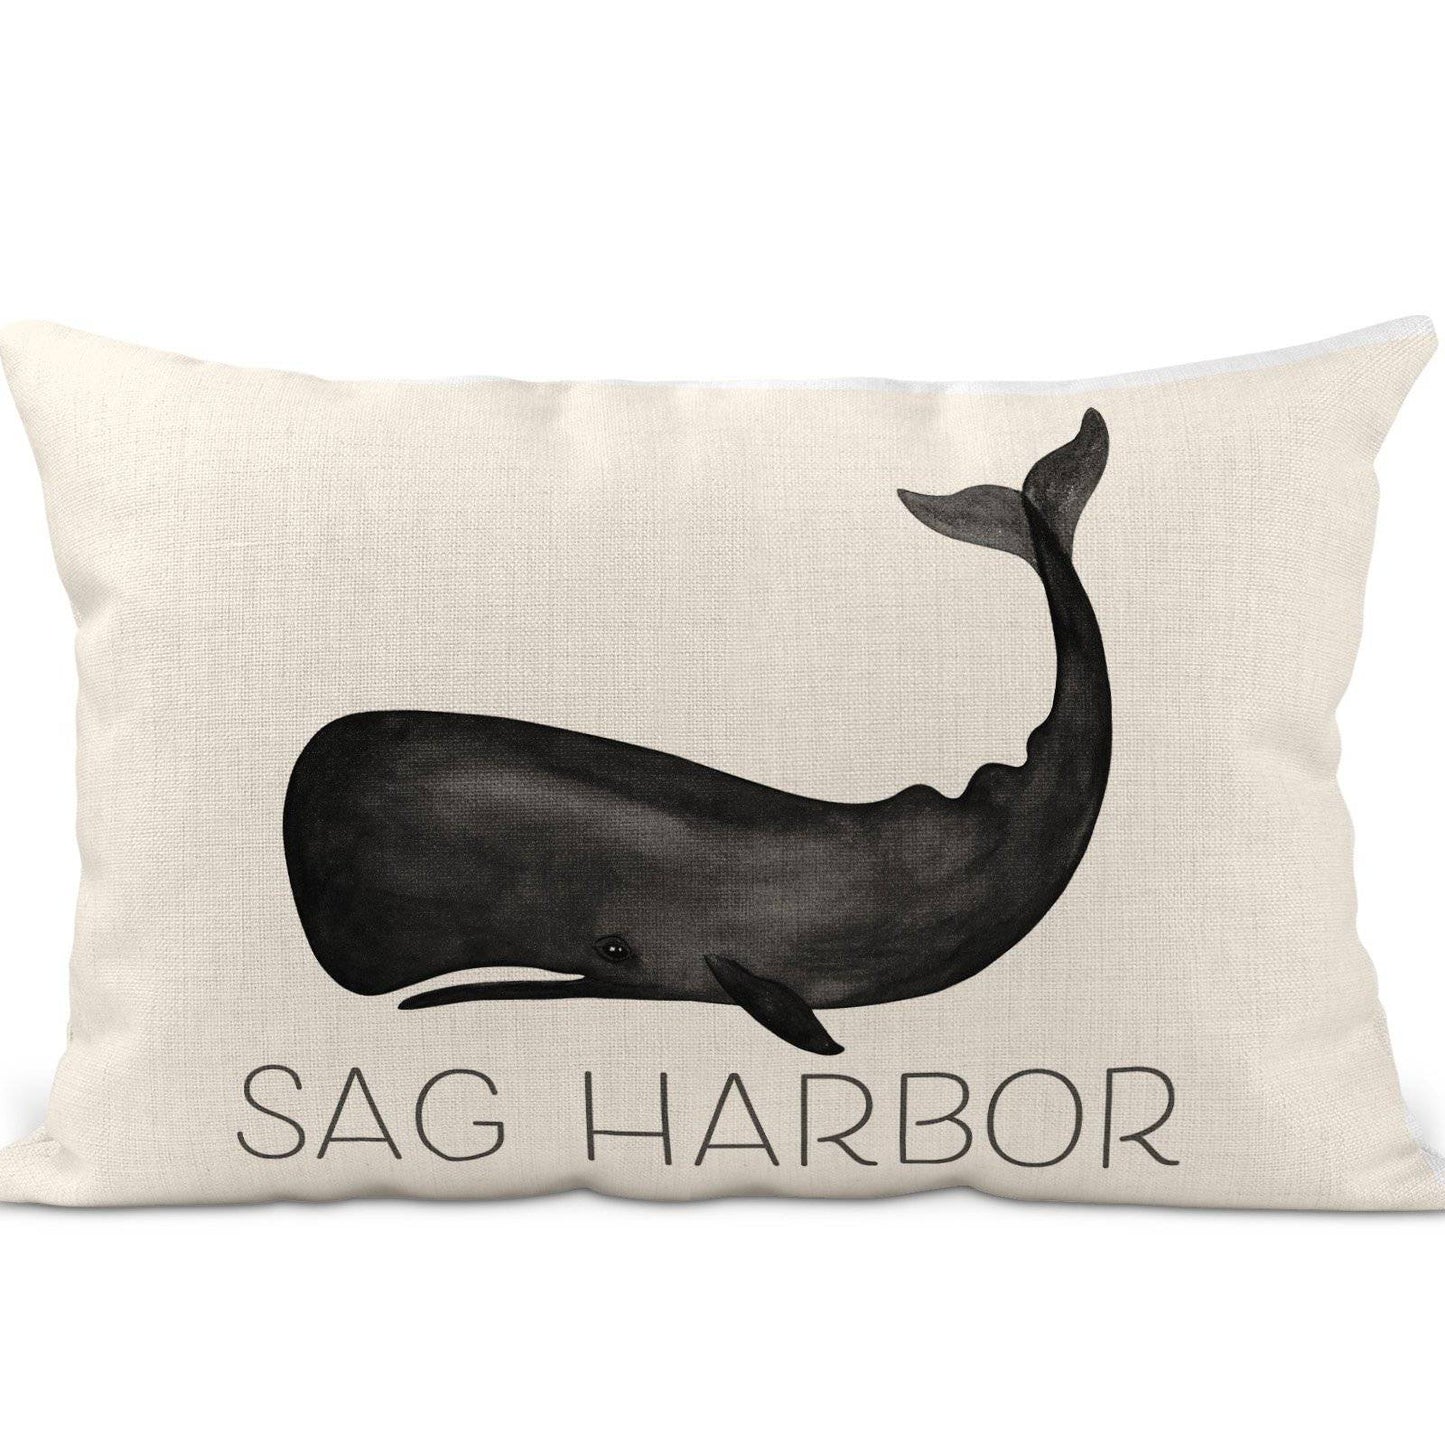 Sag Harbor Whale Pillow - Drifts East